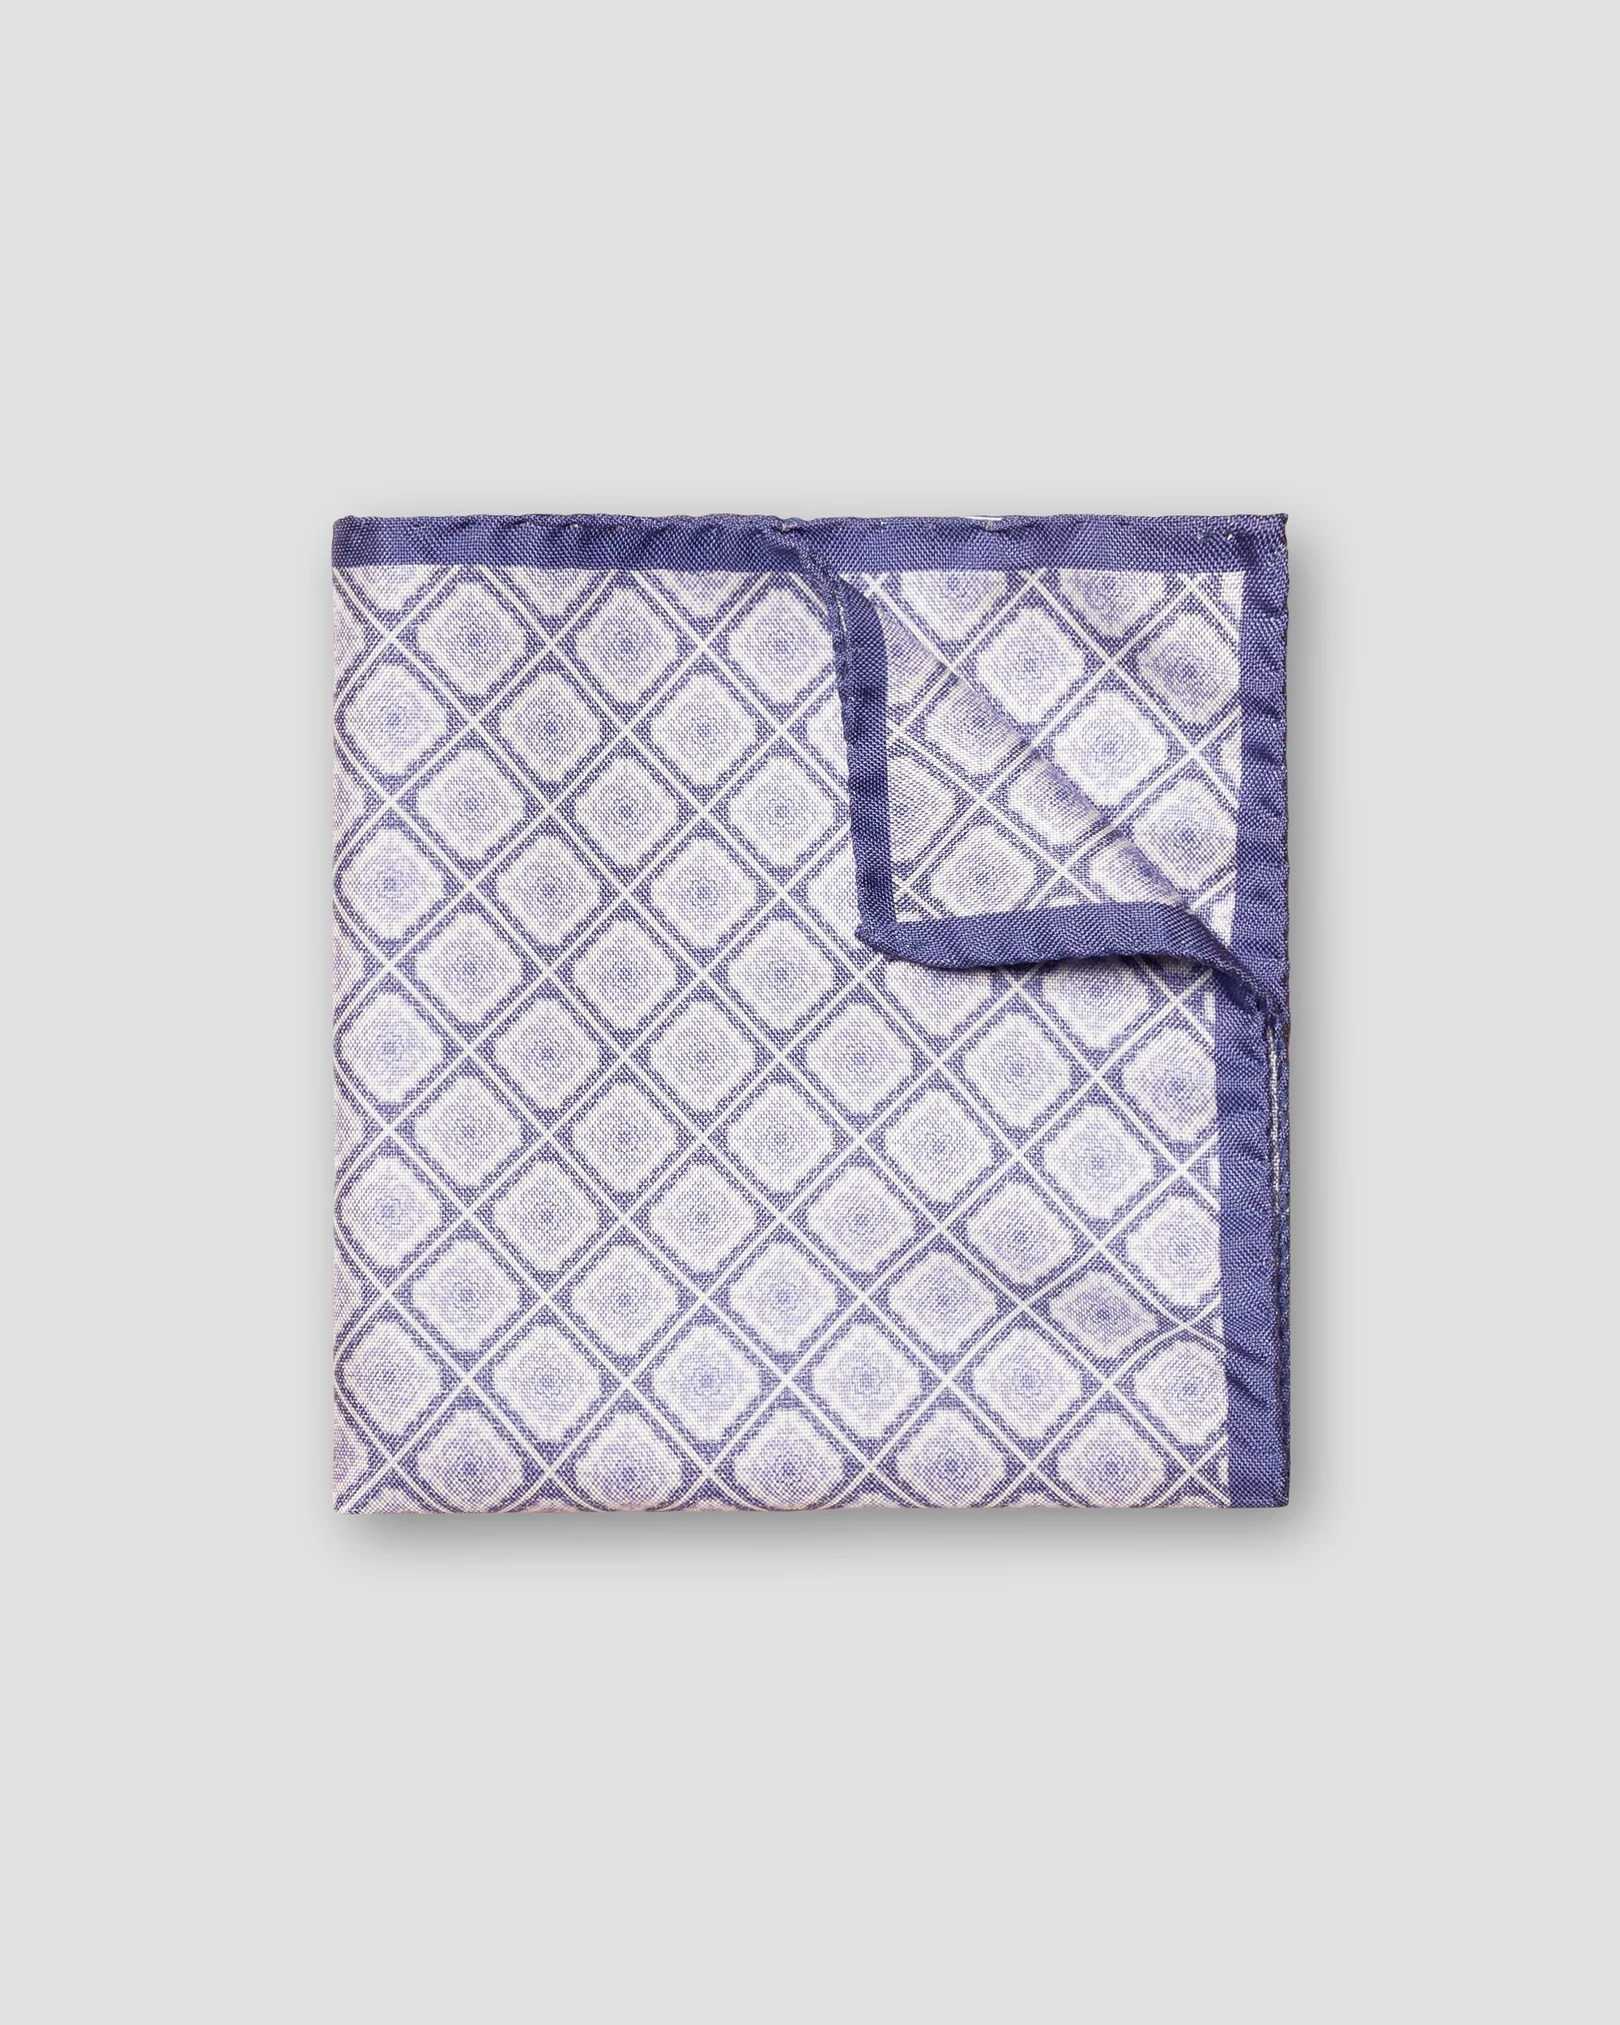 Eton - mid purplepocket square